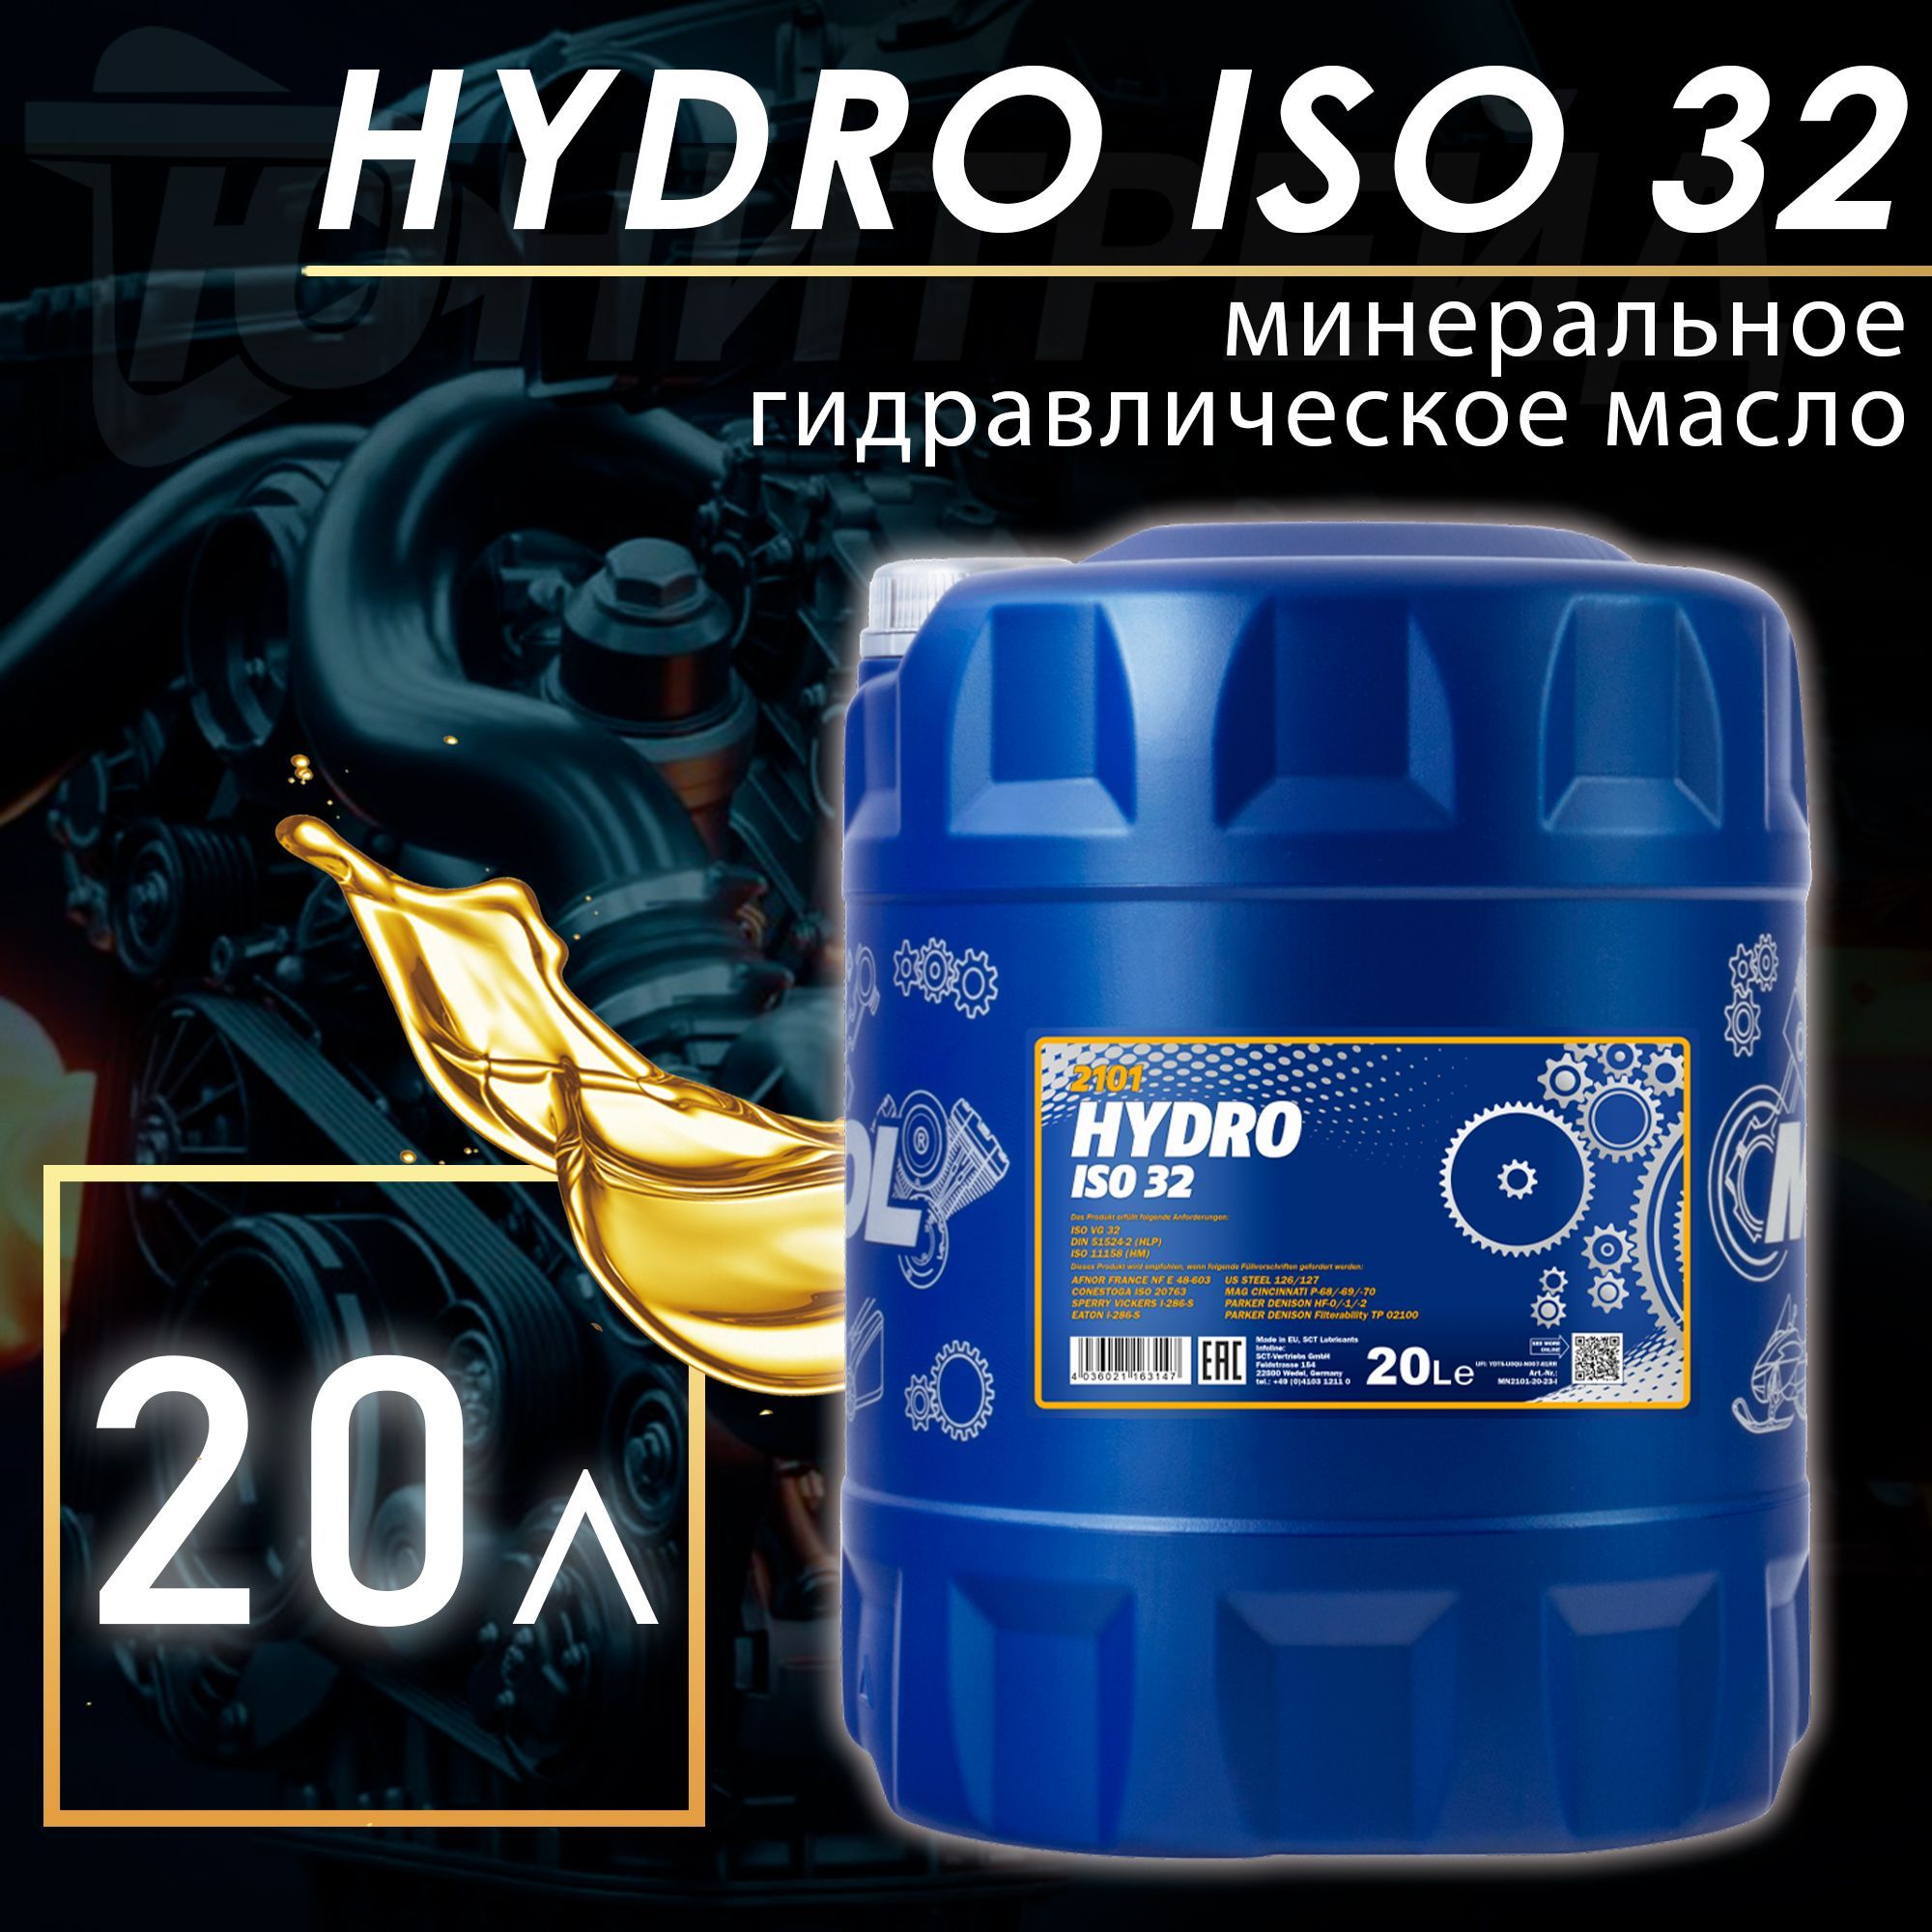 Mannol Hydro ISO 32 мин. 20л масло гидравлическое. Масло Favorit Hydro ISO 32 20л. HLD-din 51524 t2 ISO VG 22. Гидравлическое масло iso 32